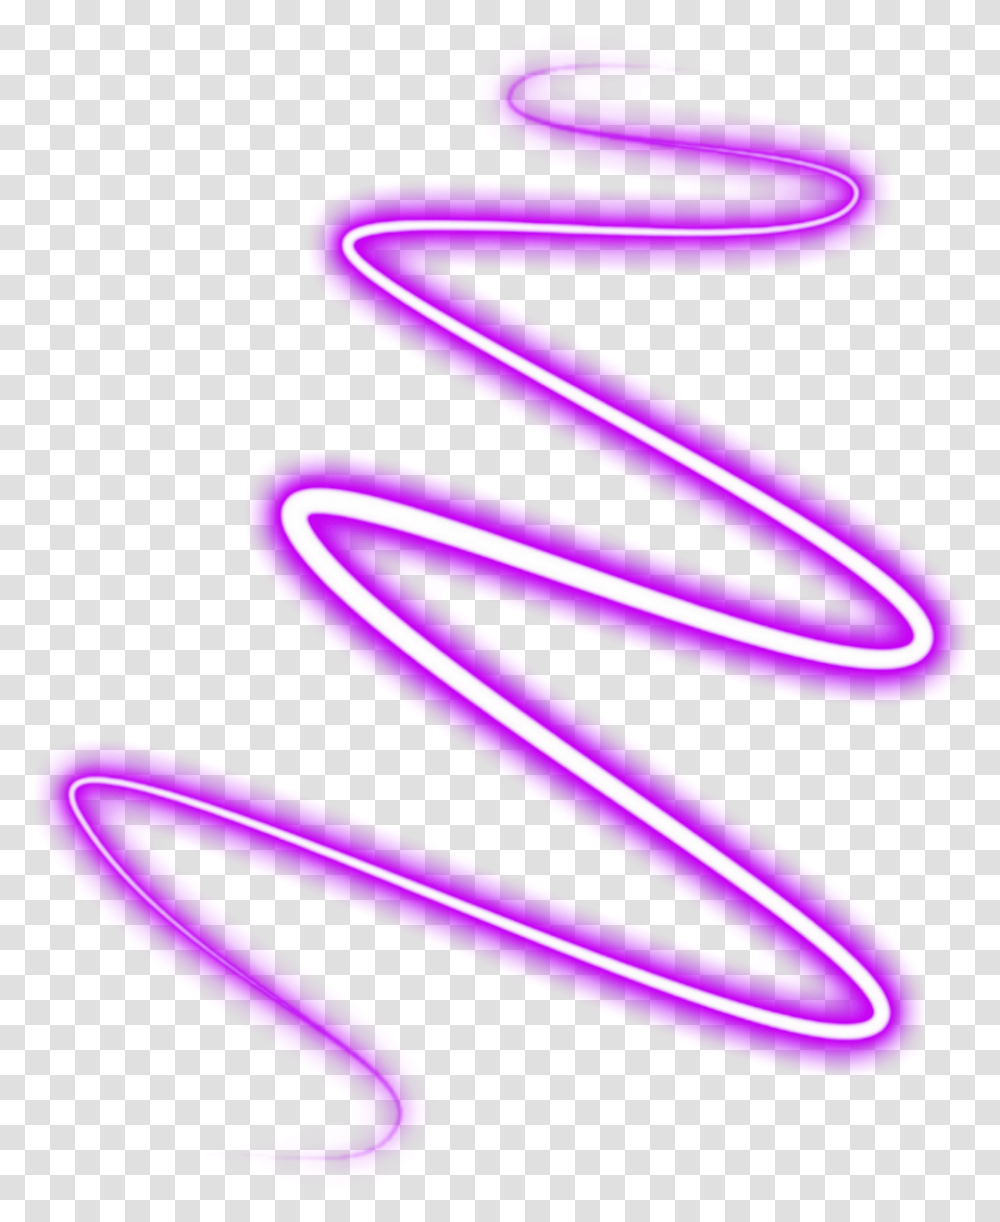 Neon Linespiral Lines Spirals Purple Freetoedit Pink Neon Line, Light, Scissors, Blade, Weapon Transparent Png